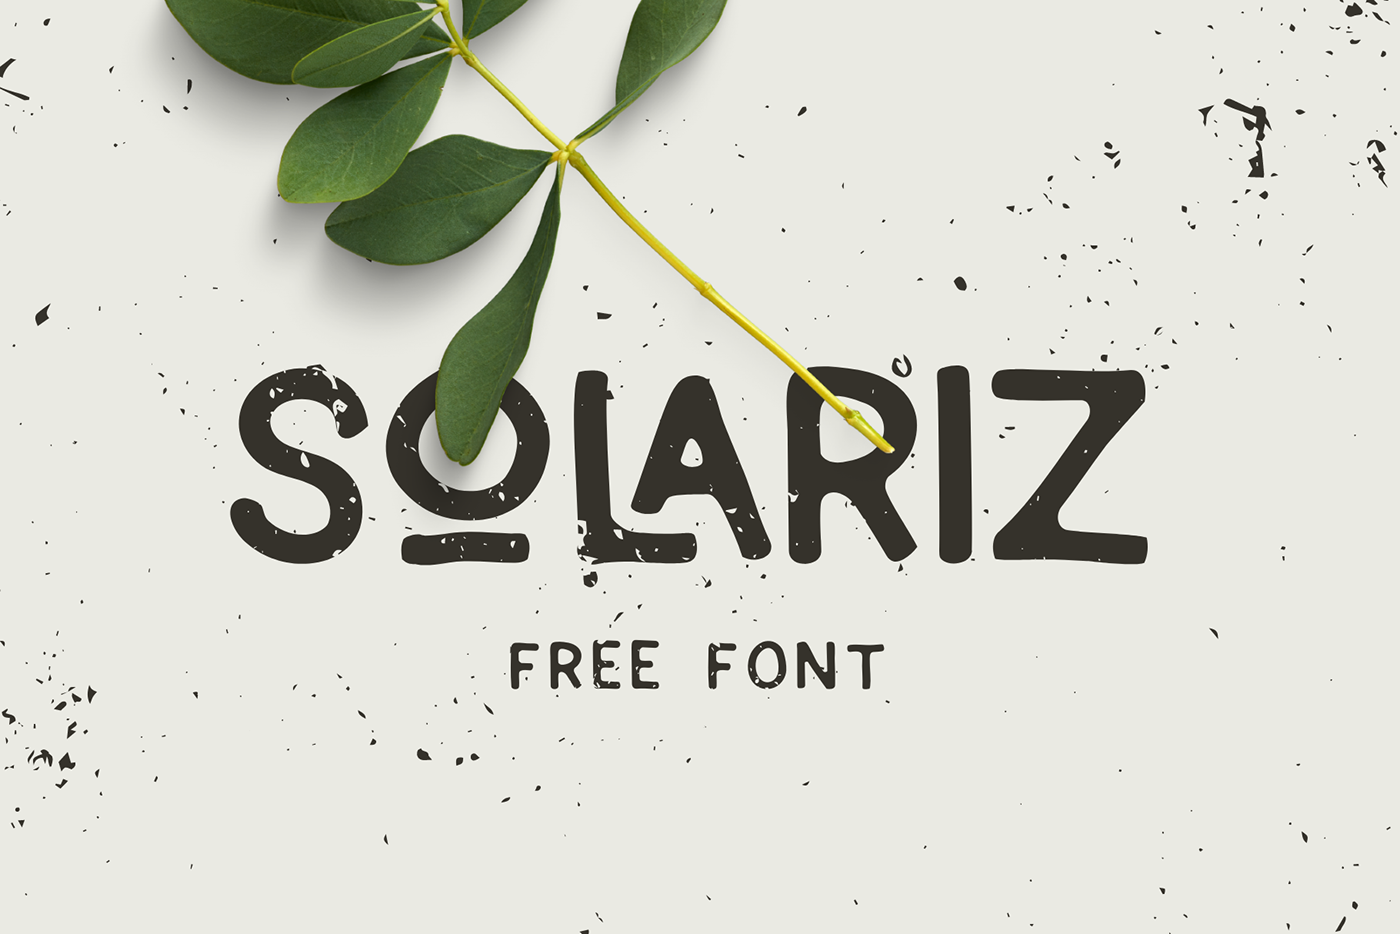 font Typeface retro font groovy font Free font freebies